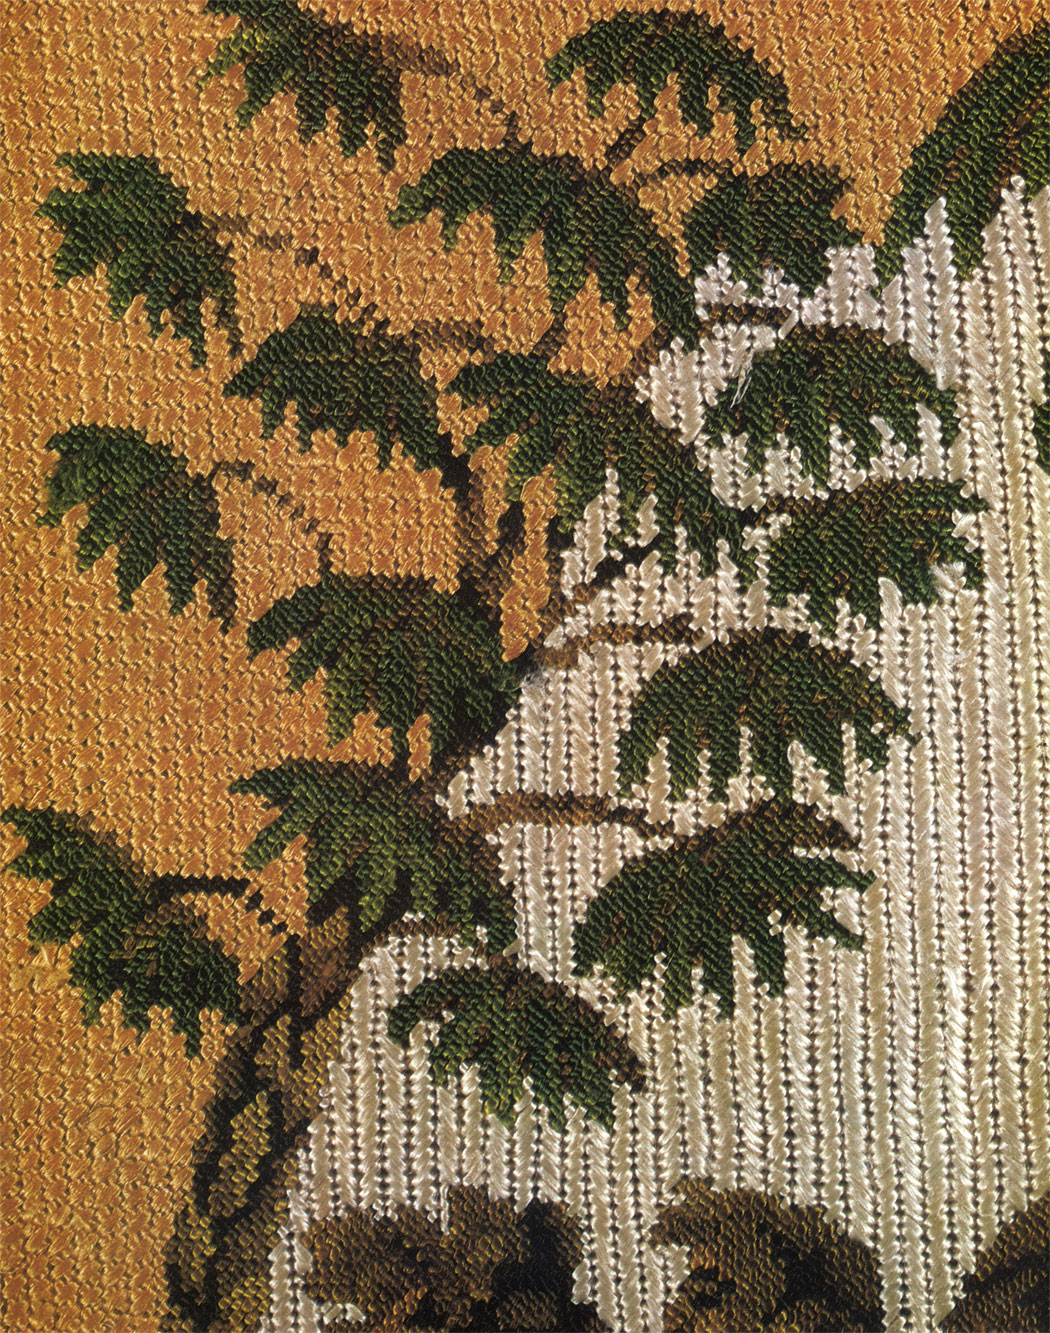 Embroidery in half-cross stitch, cross stitch